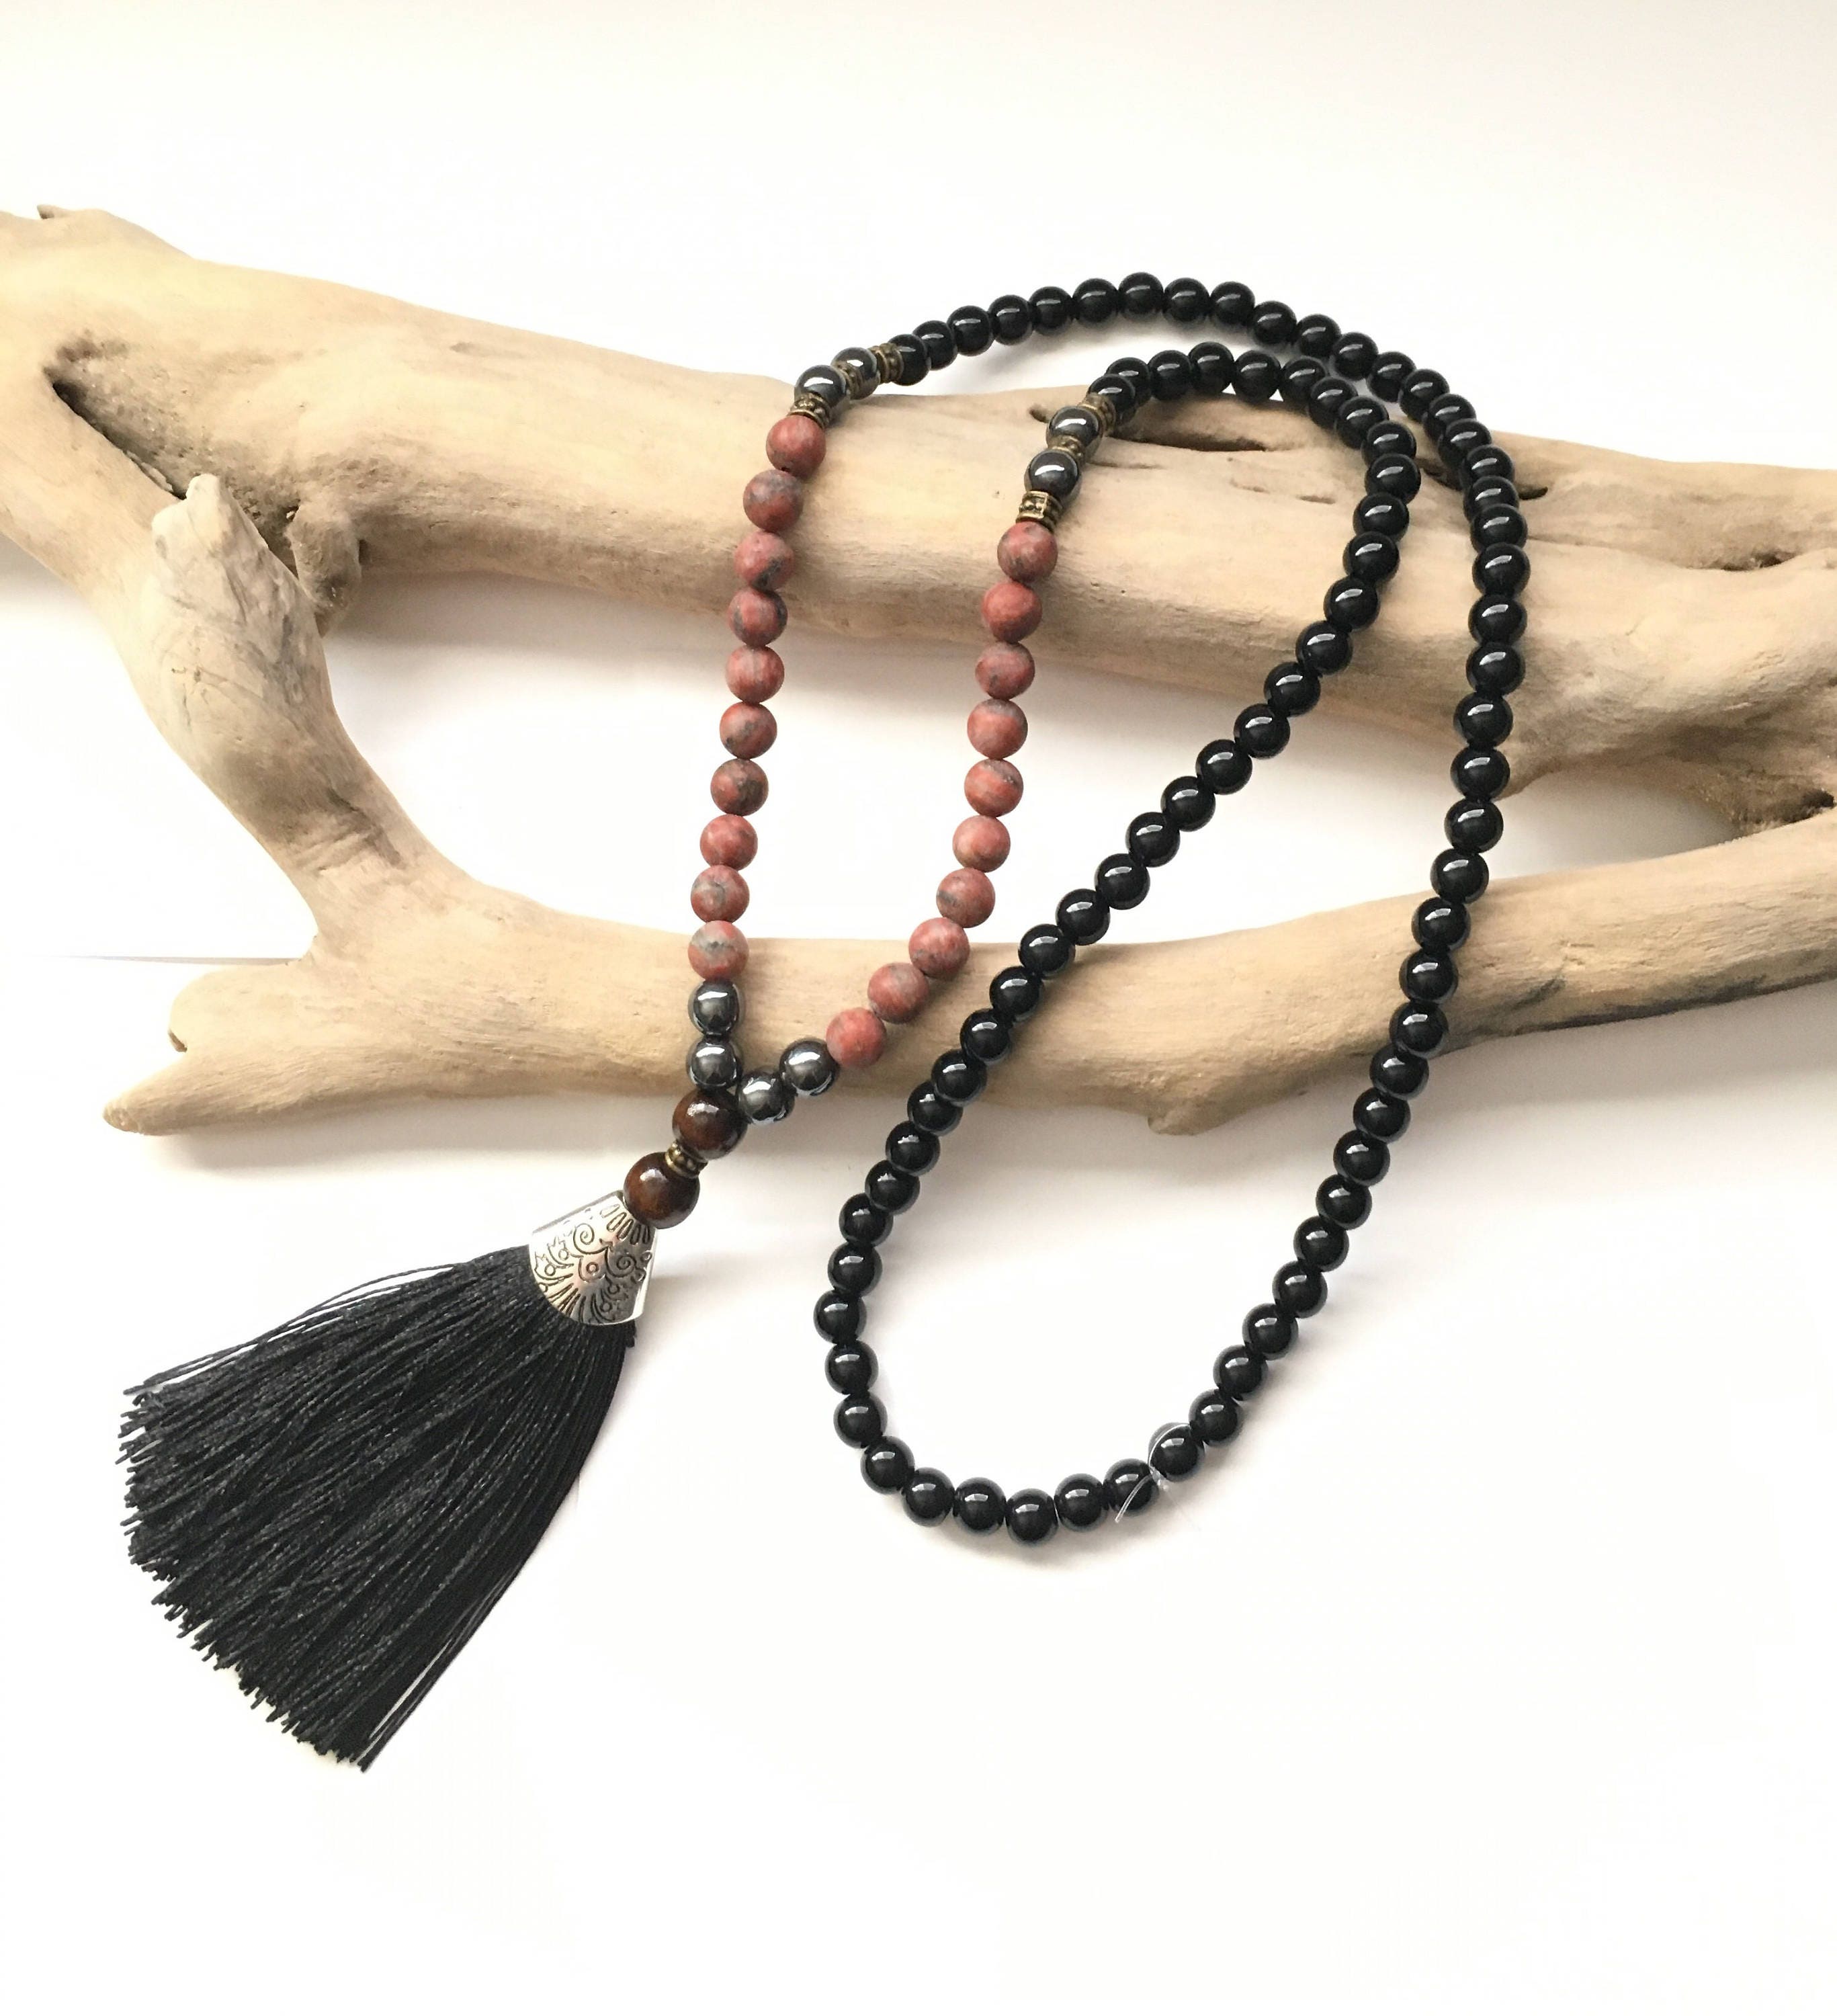 Boho black natural beads with tassle